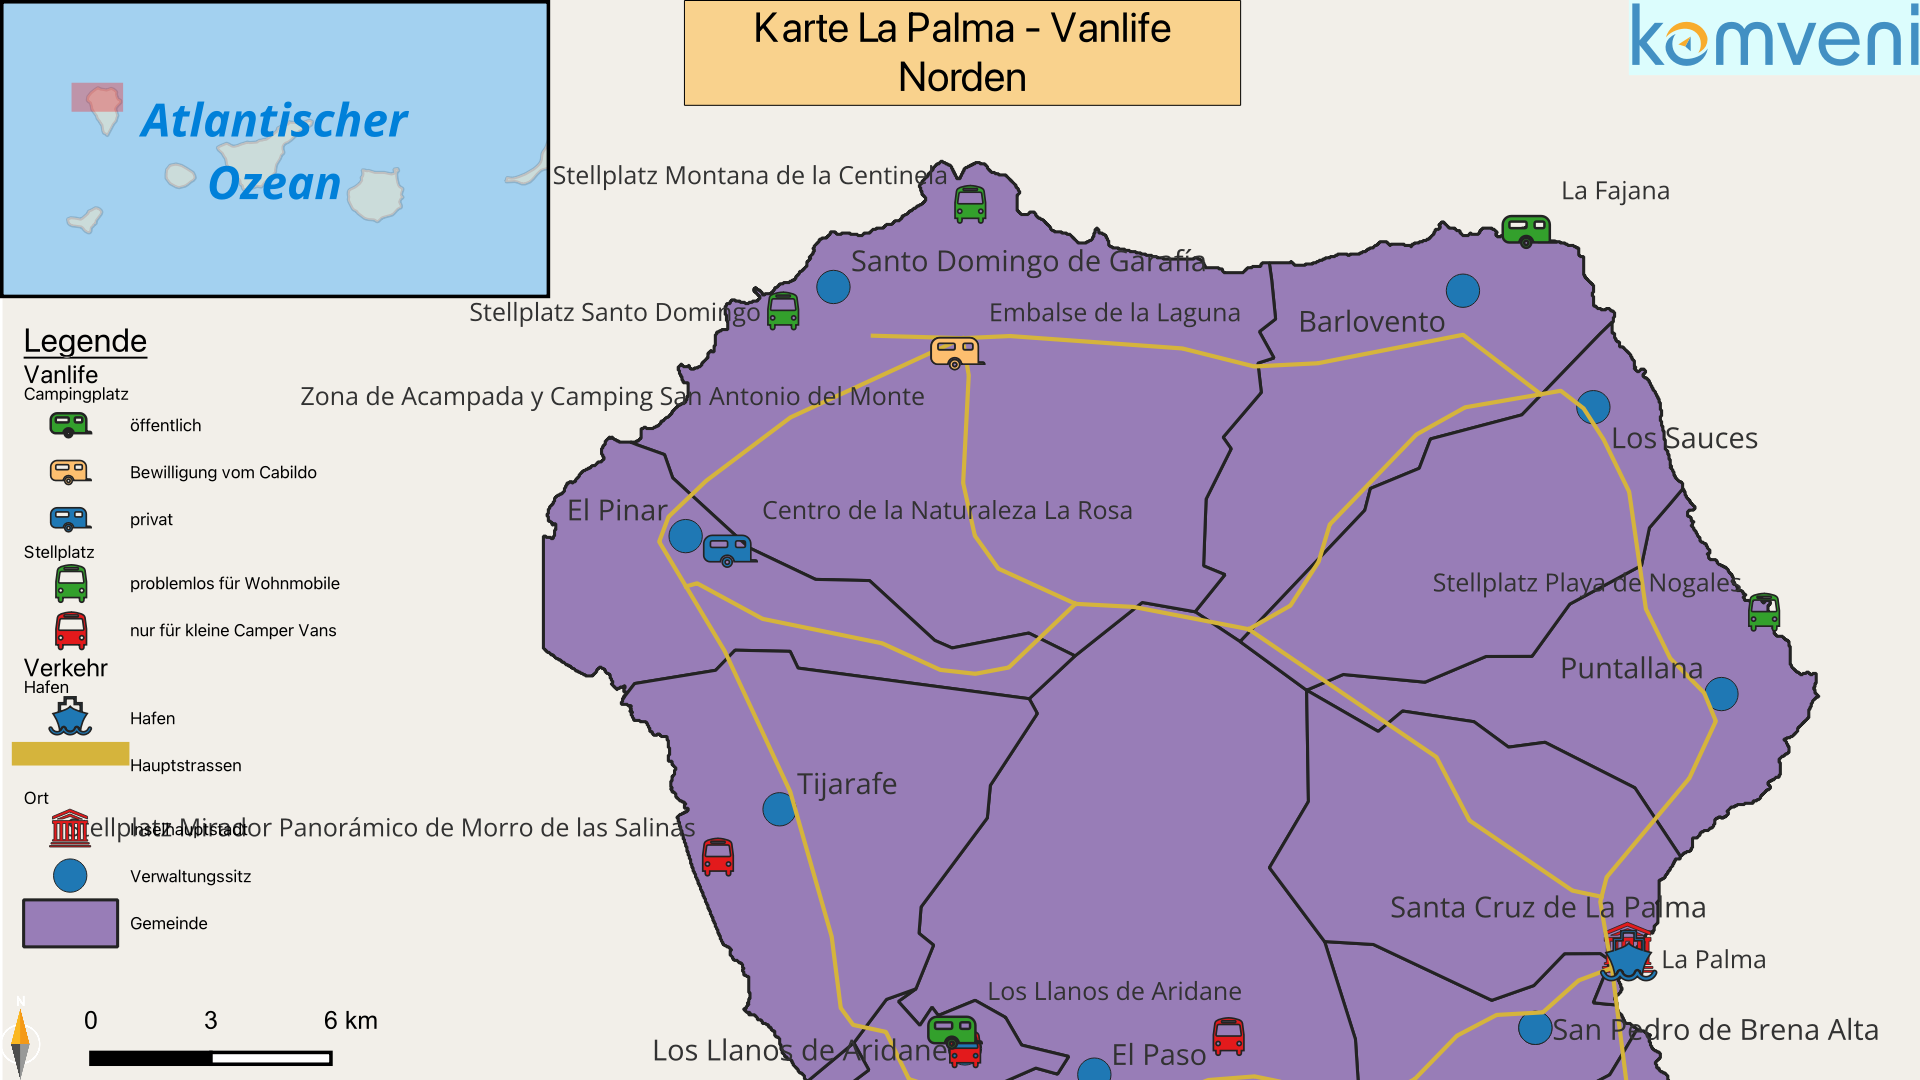 Karte La Palma Vanlife Norden